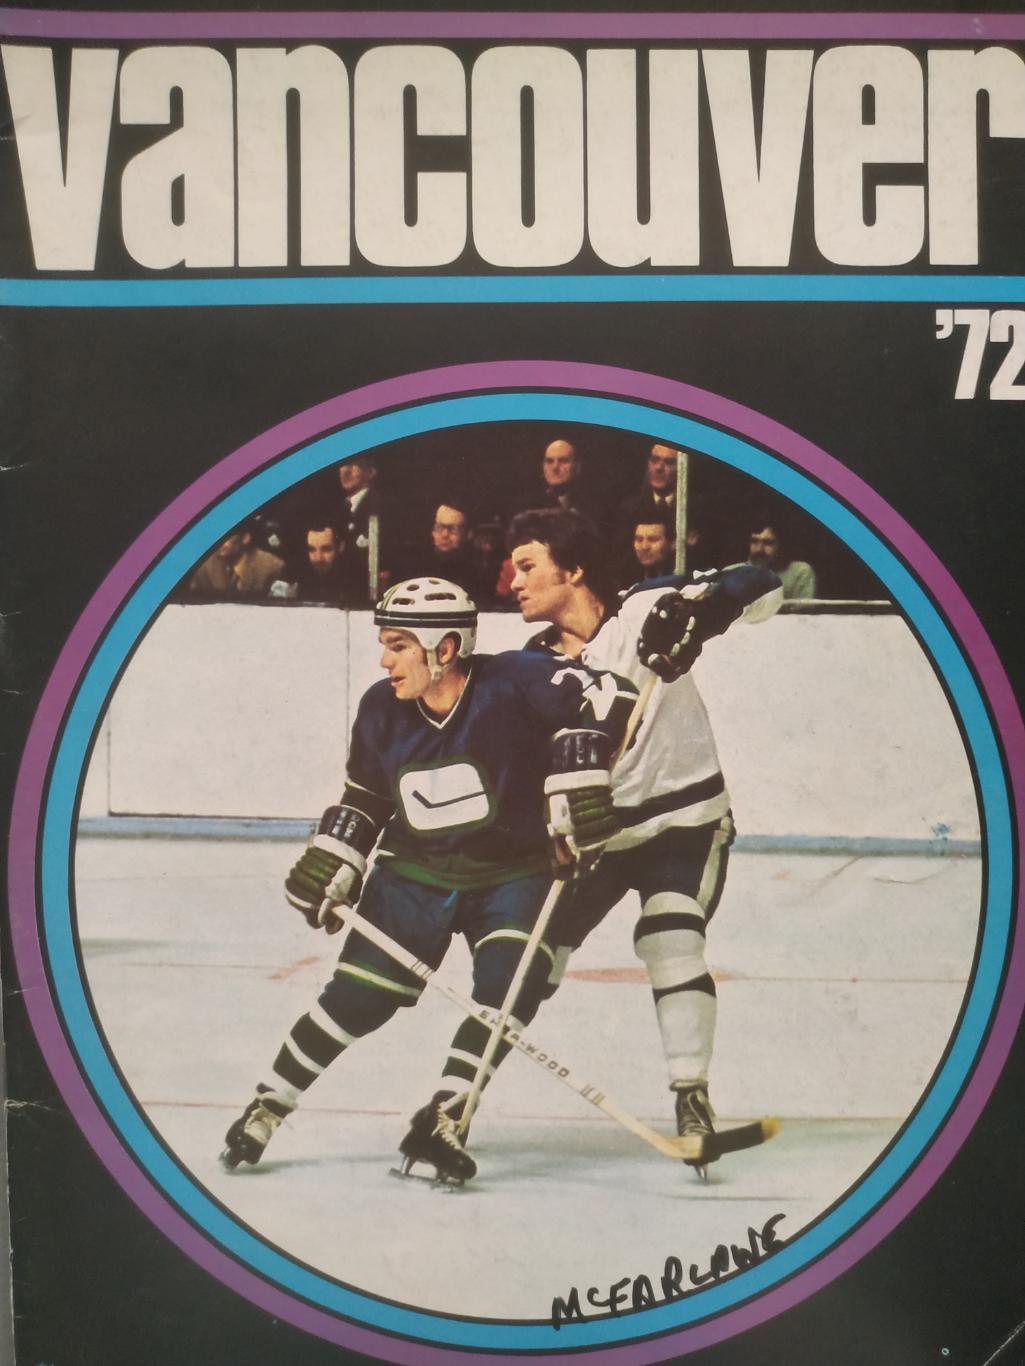 ХОККЕЙ ПРОГРАММА АЛЬБОМ ВАНКУВЕР НХЛ NHL 1971 DEC.04 VANCOUVER PROGRAM